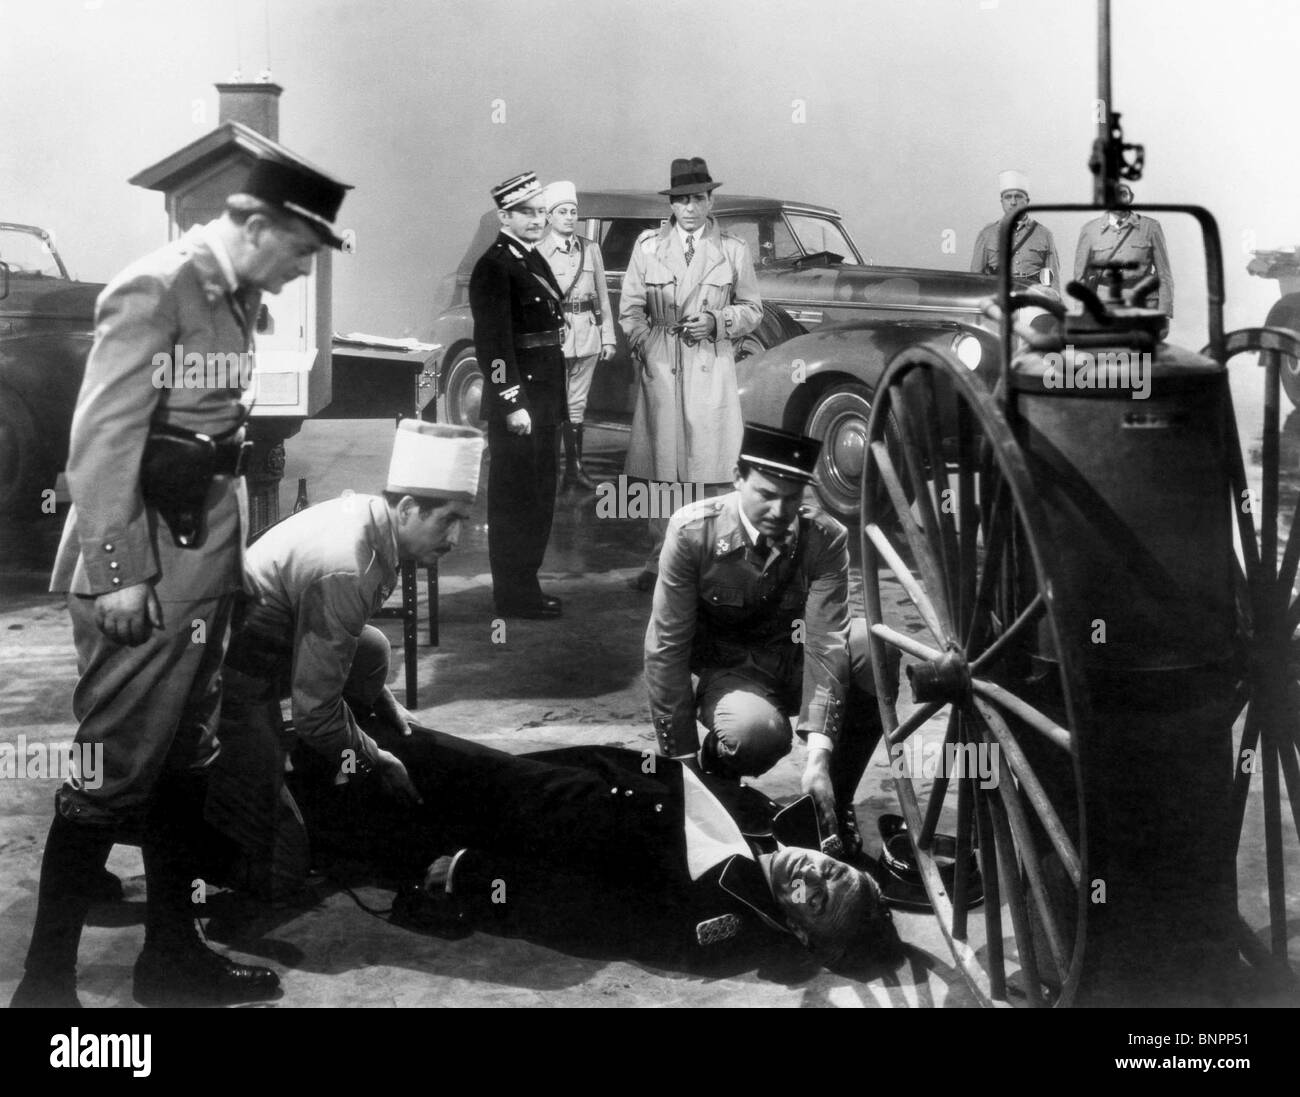 CONRAD VEIDT, CLAUDE RAINS, HUMPHREY BOGART, ALBERTO MORIN, CASABLANCA, 1942 Stock Photo